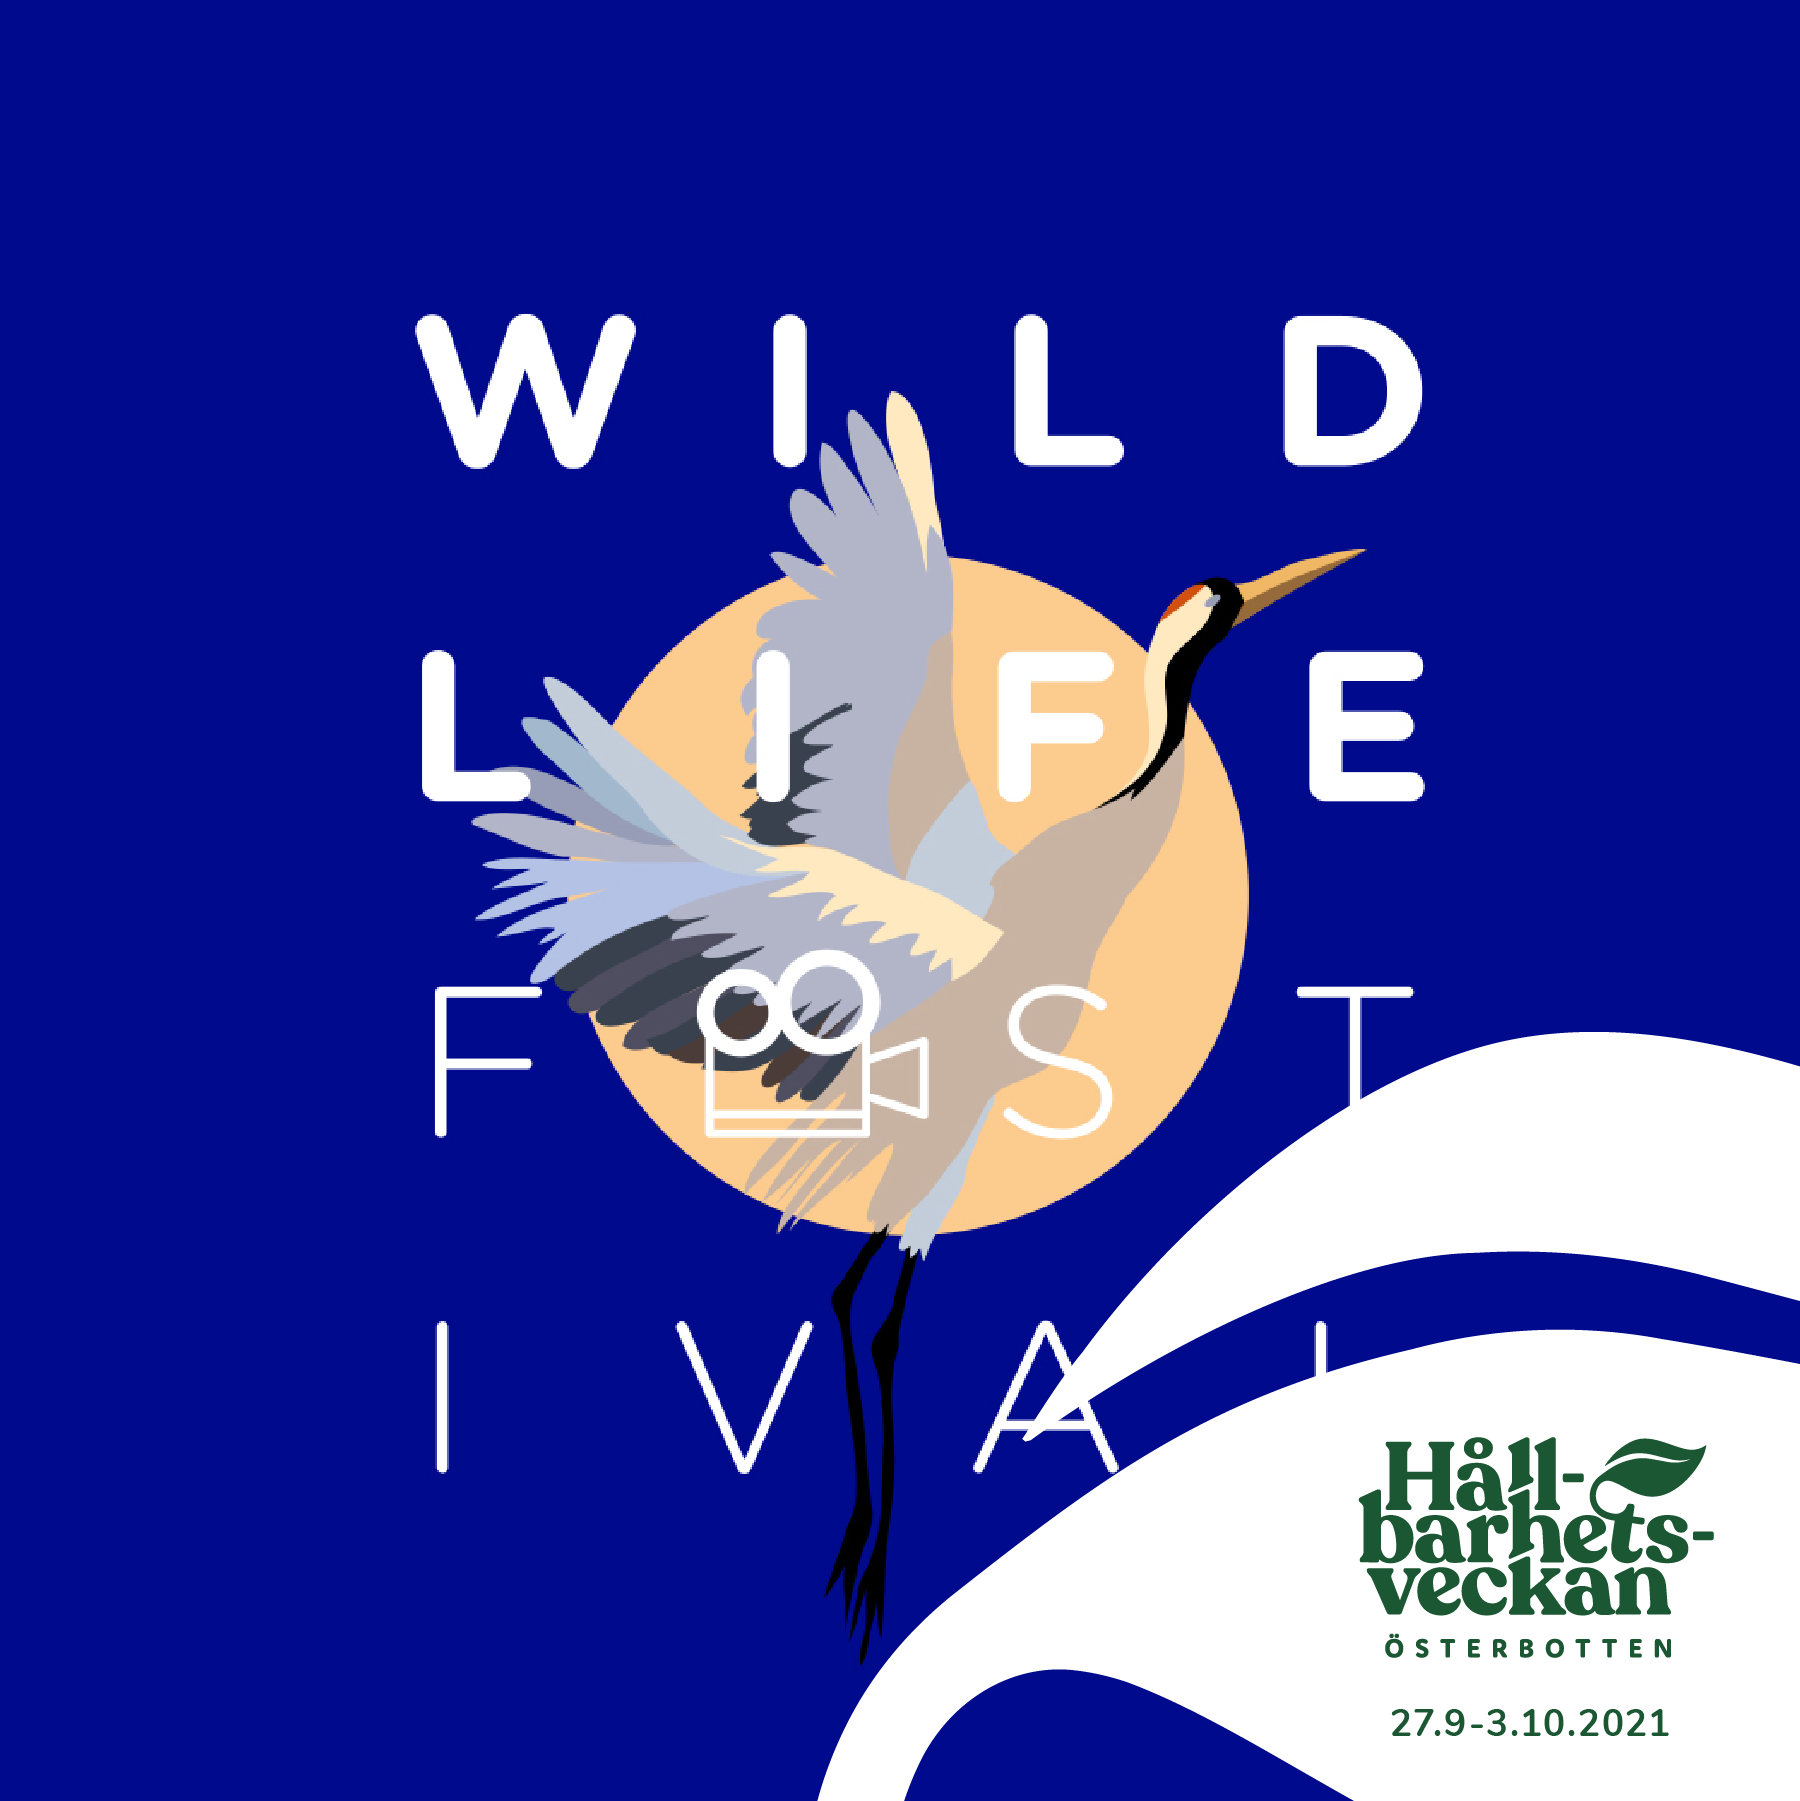 Vasa Wildlife festivalens höstevenemang featured image